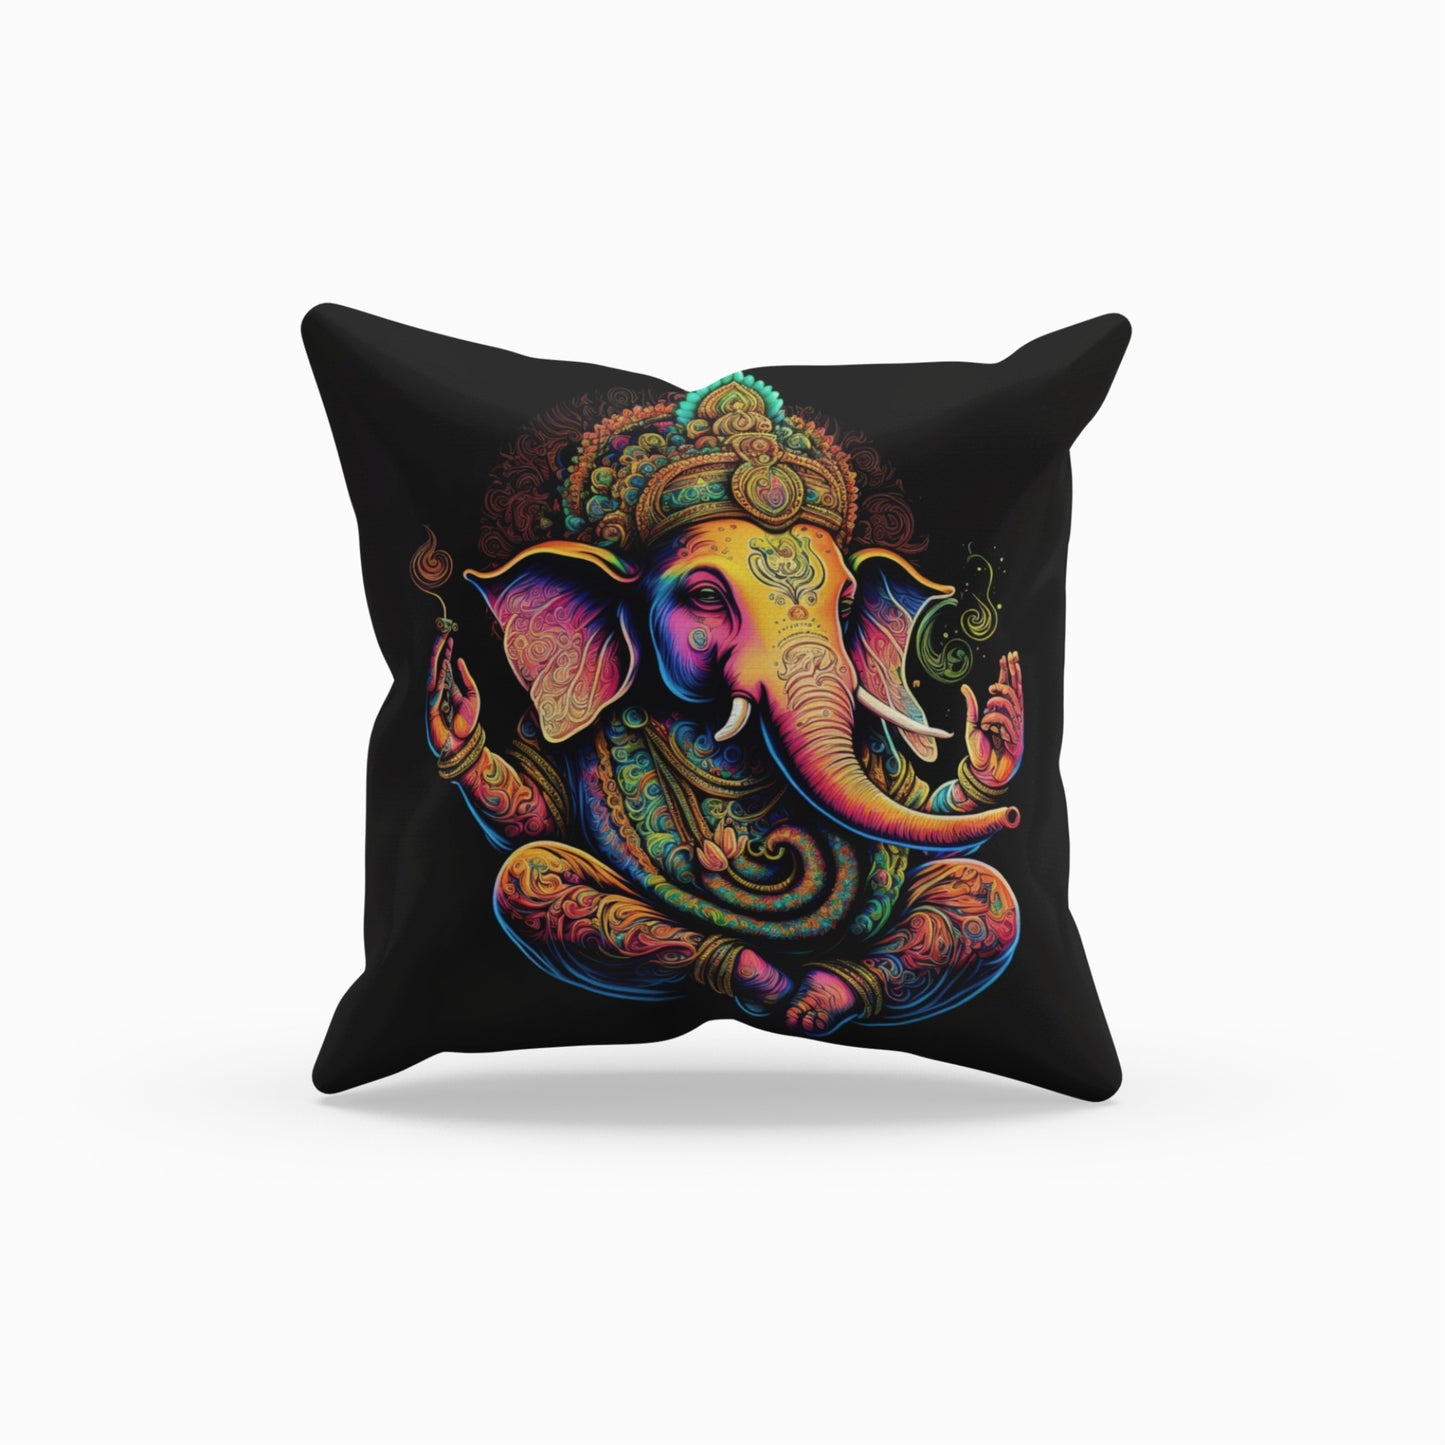 Homeezone's Elephant Meditation Pillow